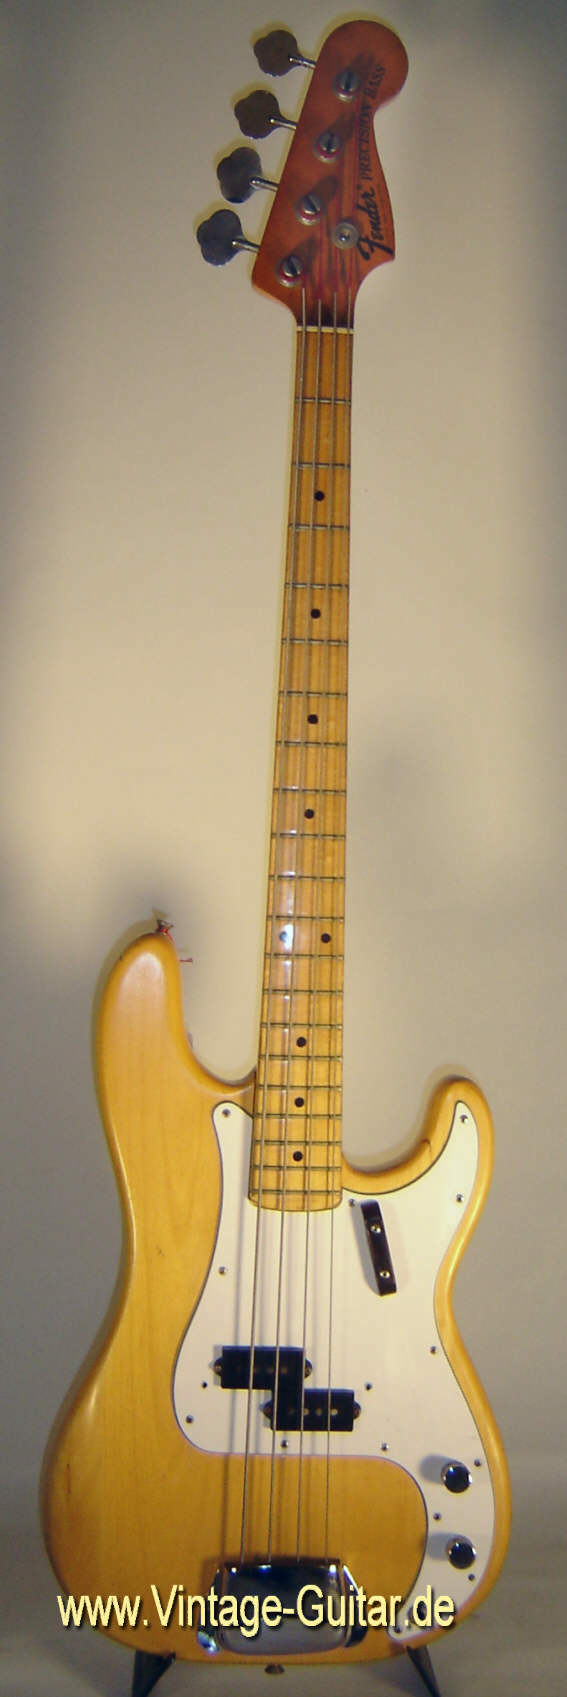 Fender Precision Bass 1972 natural front.jpg